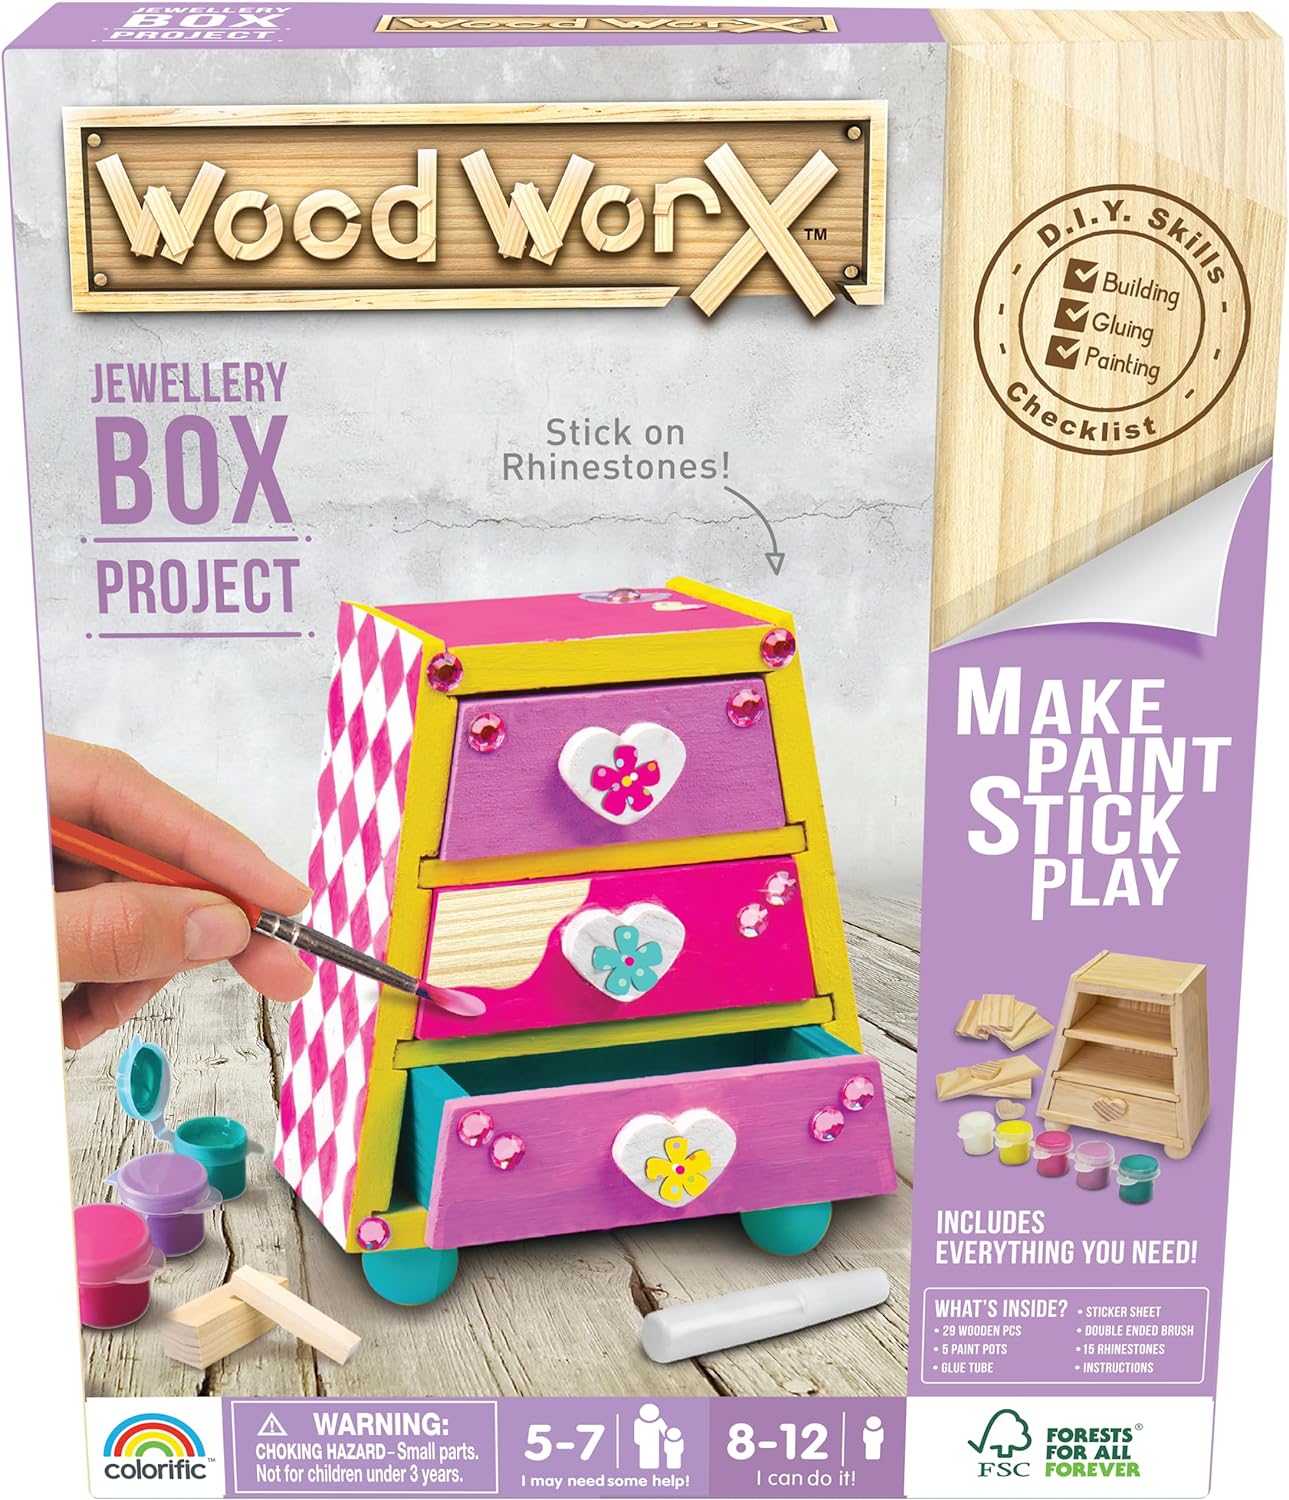 Wood WorX Jewellery Box Project